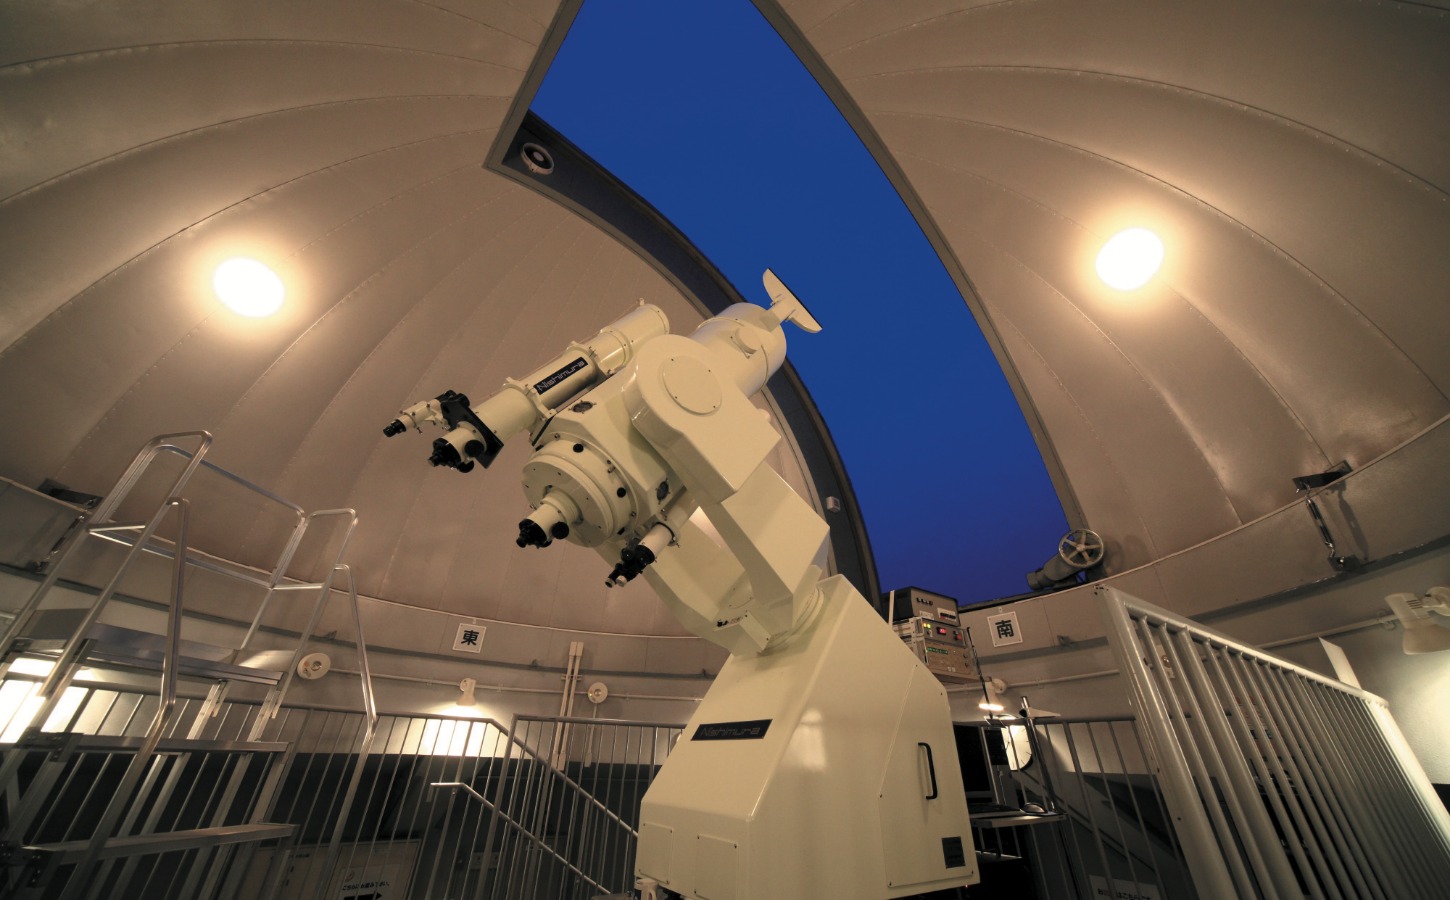 Akashi Municipal Planetarium Stargazing Event to Enjoy the Night Sky